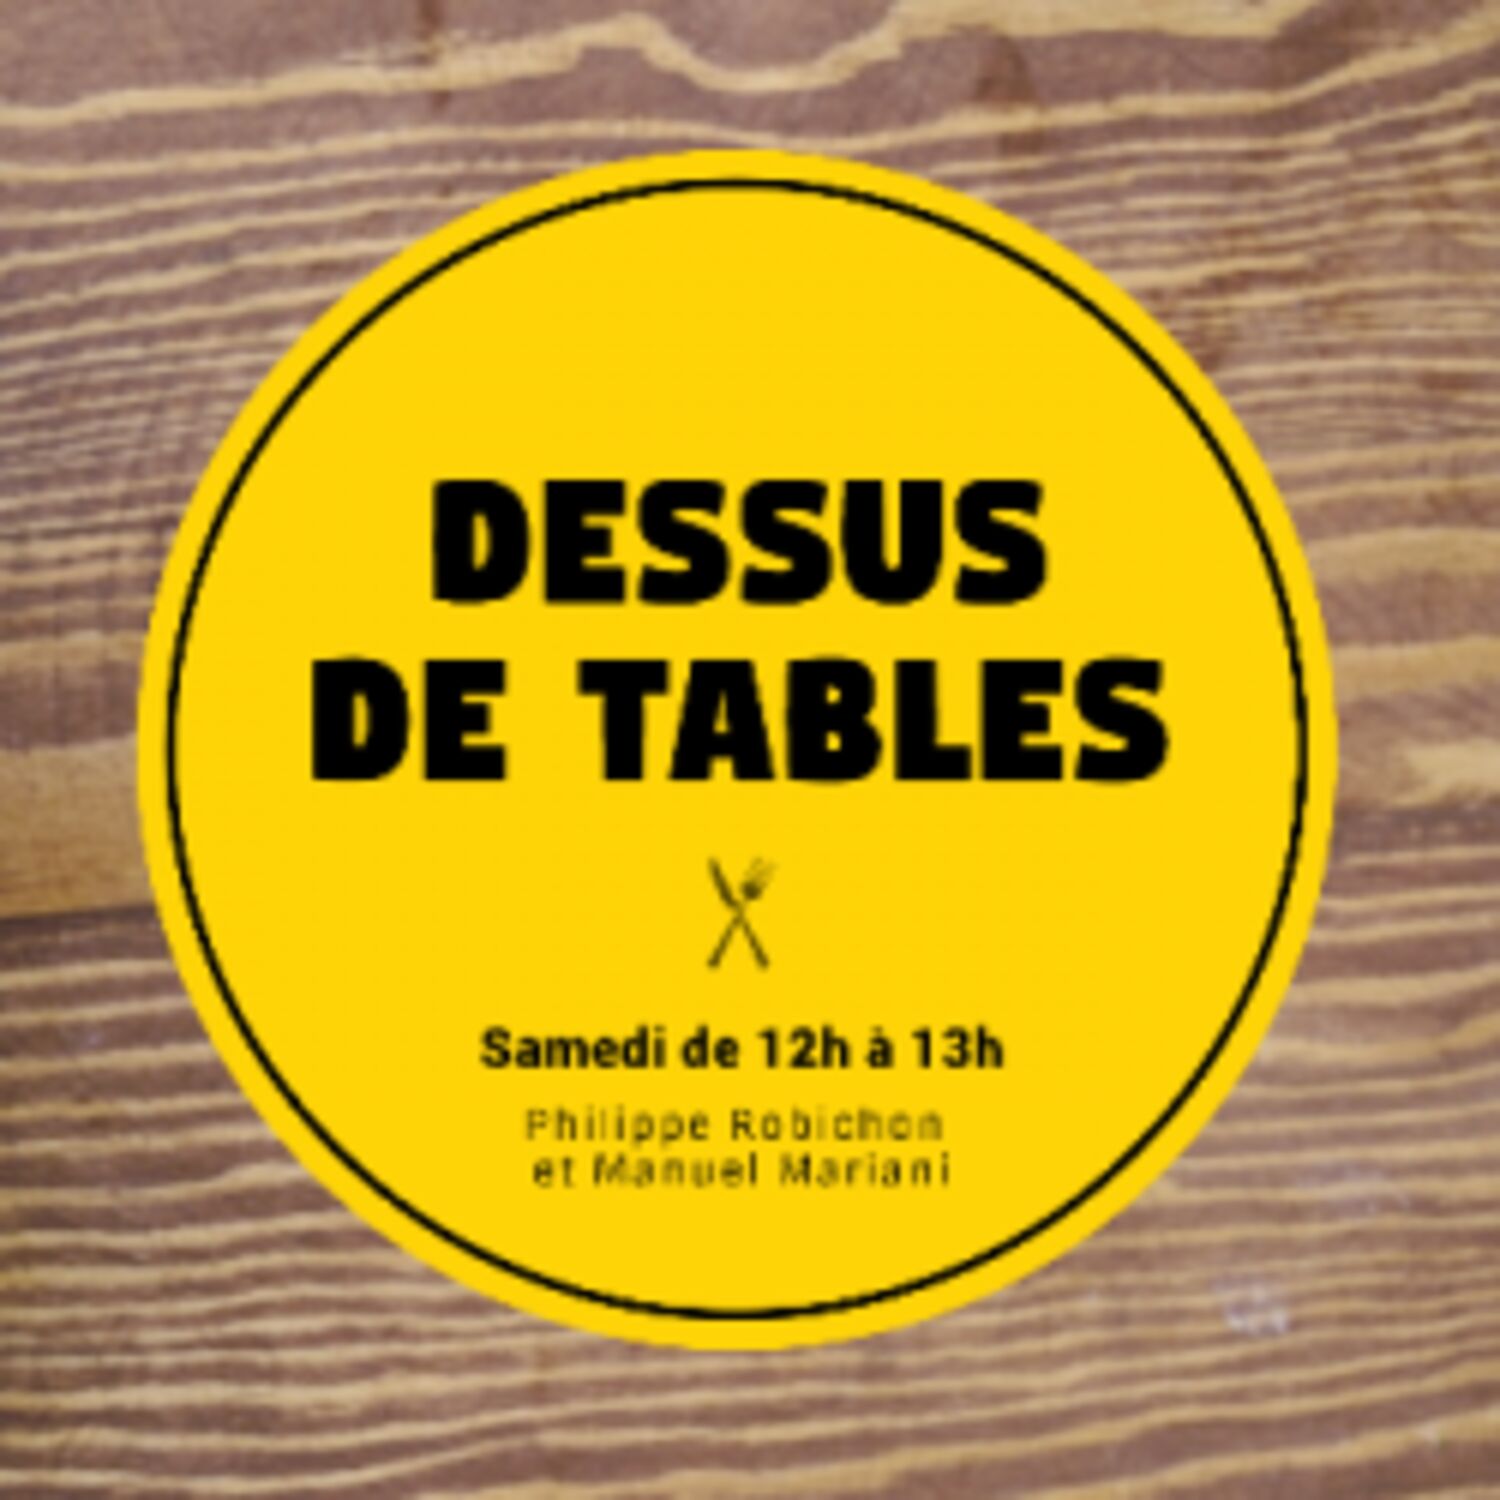 Dessus de tables 16-01-2021